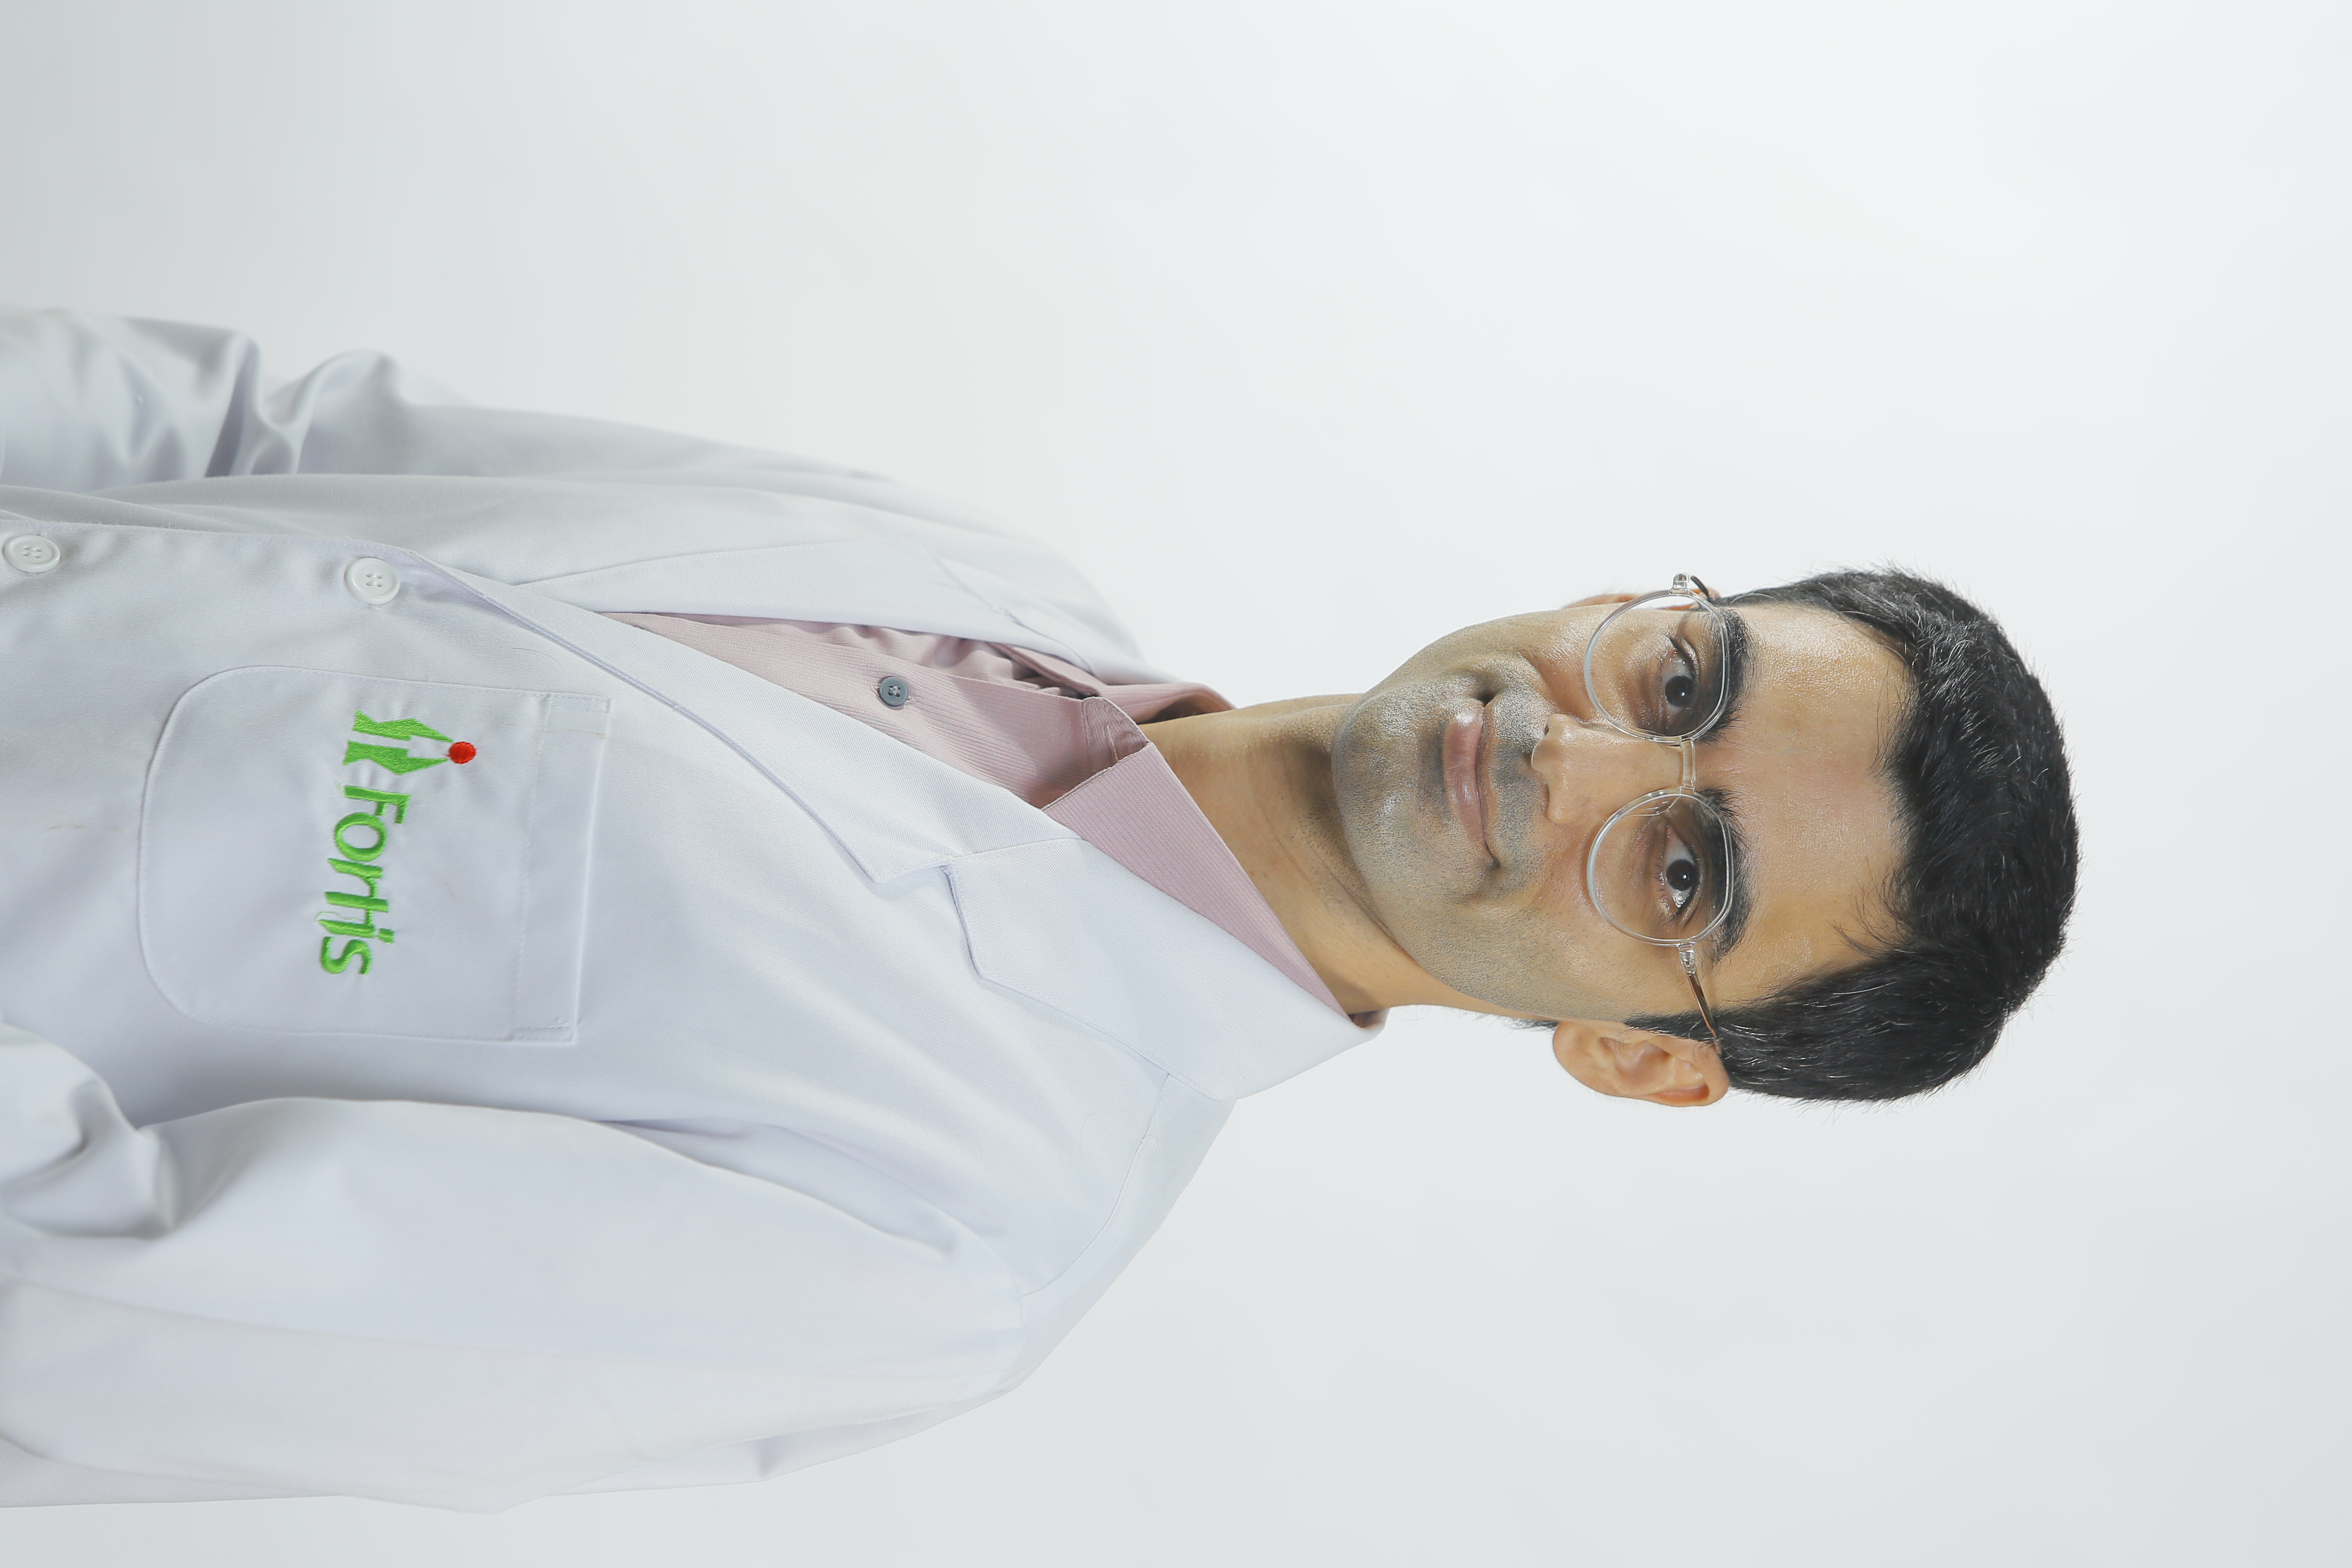 Dr. Aditya Ashok Murgai